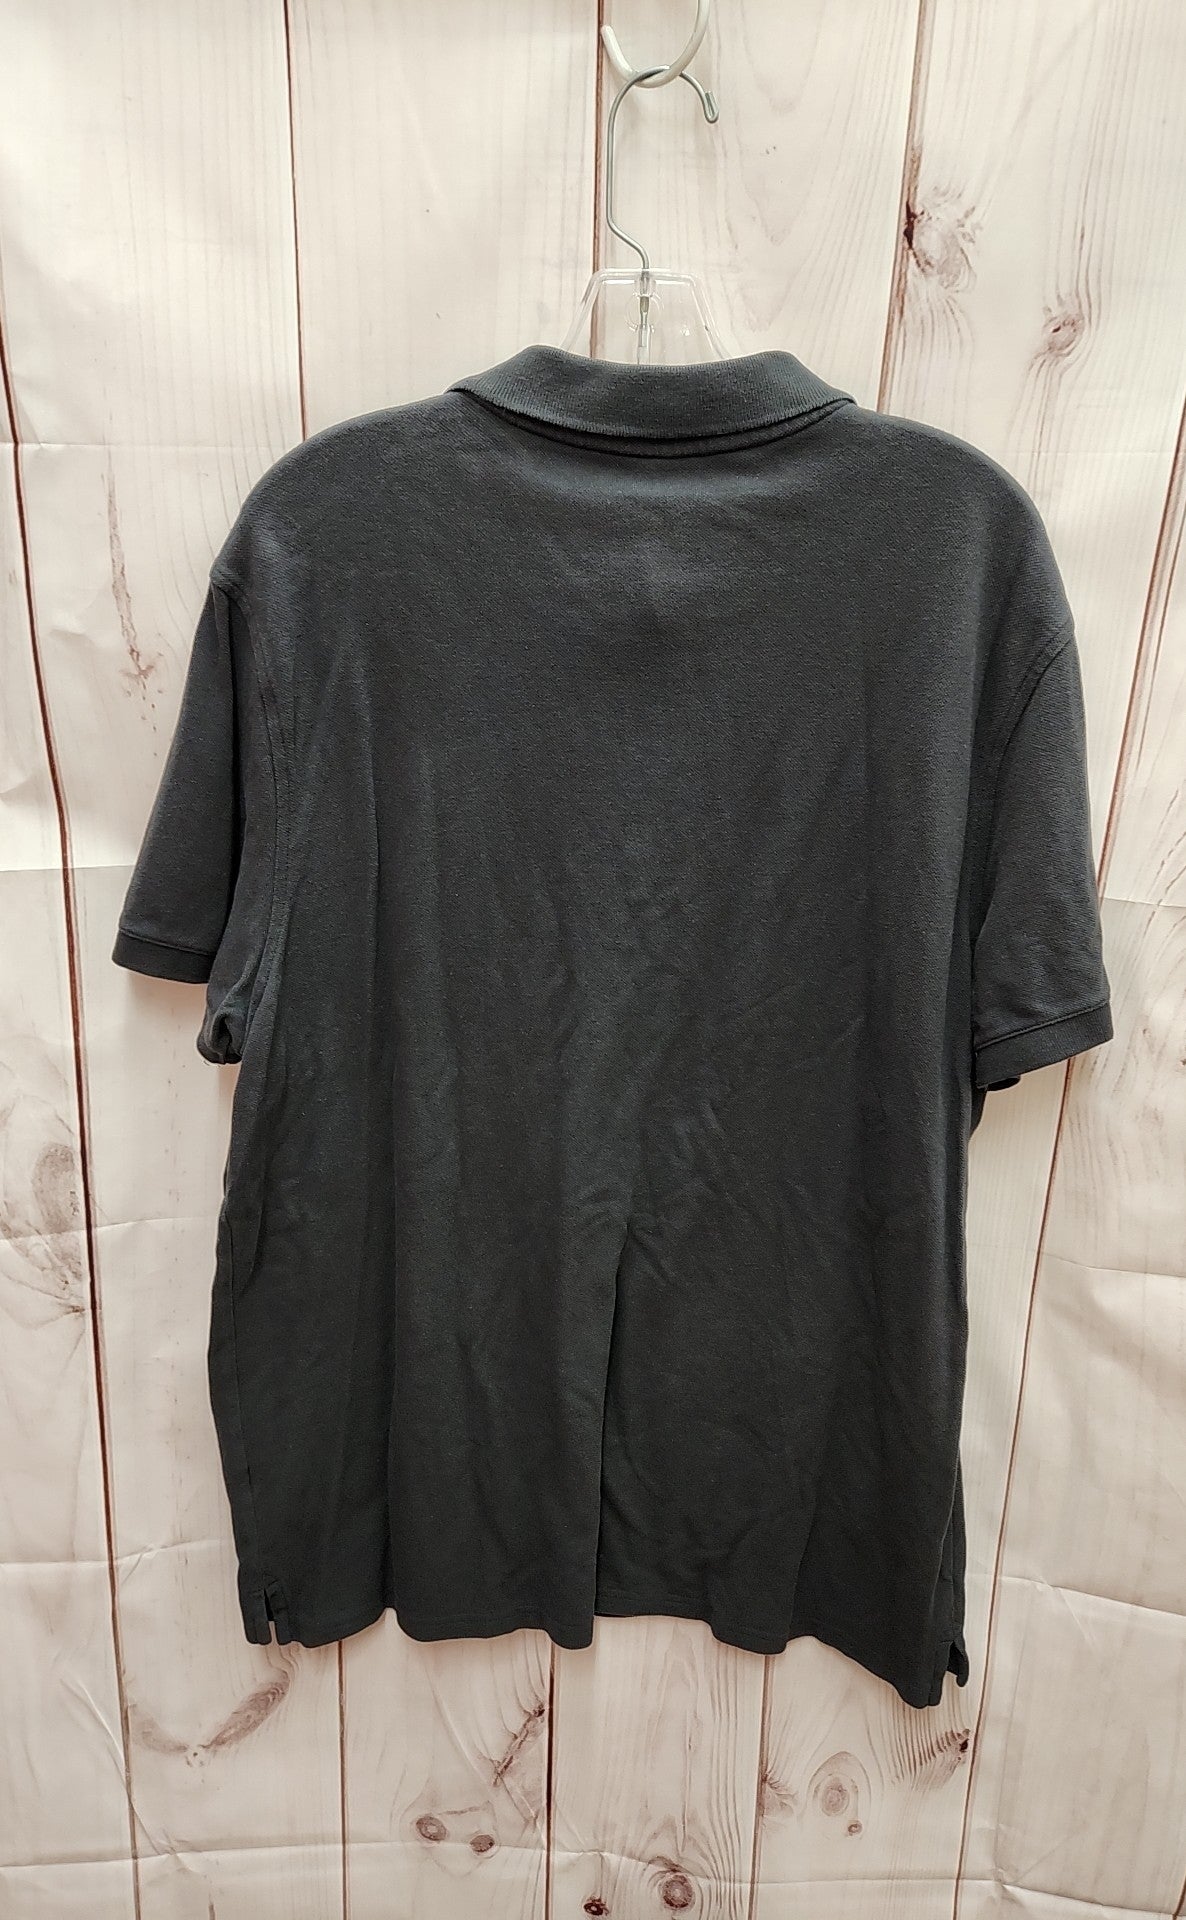 Sonoma Men's Size L Gray Shirt